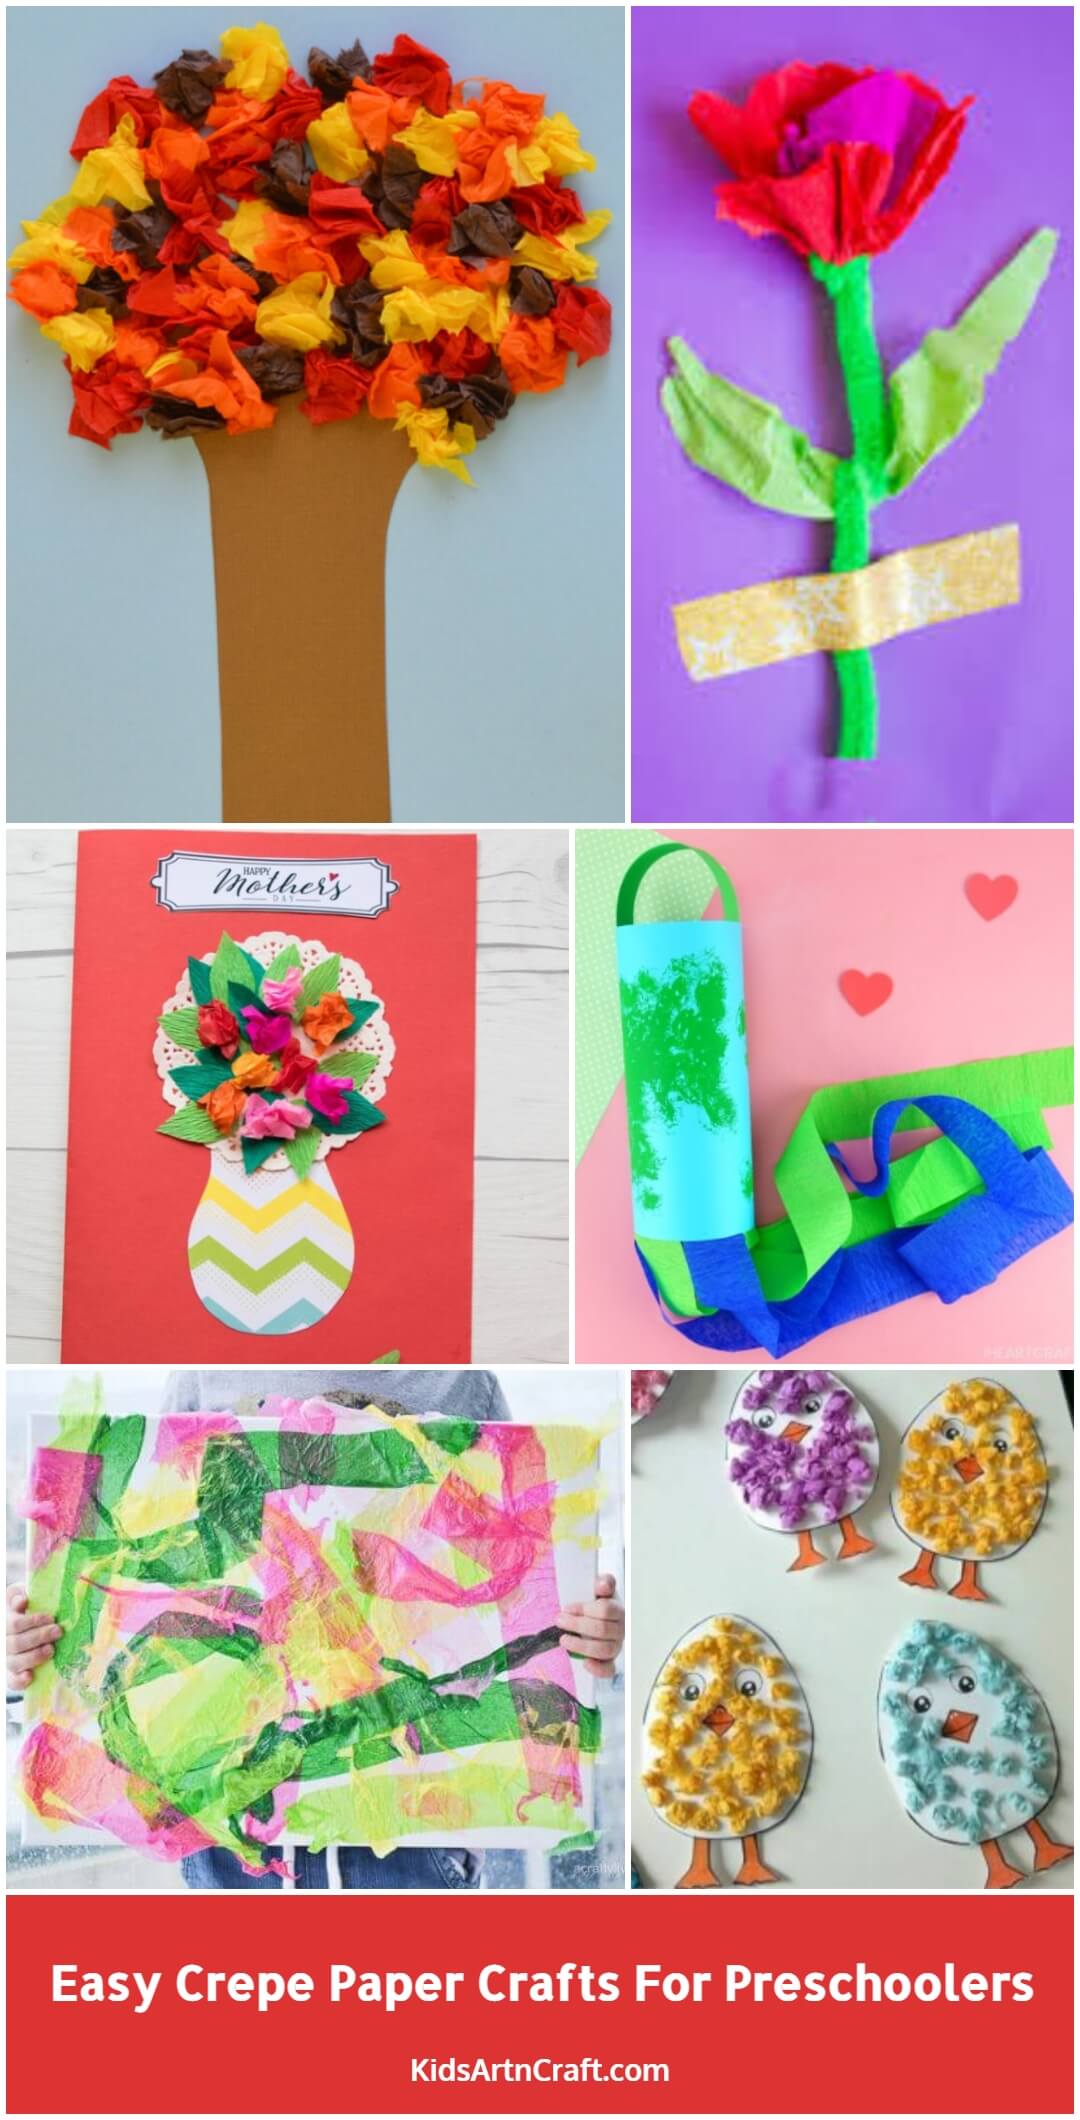 Easy Crepe Paper Crafts for Preschoolers